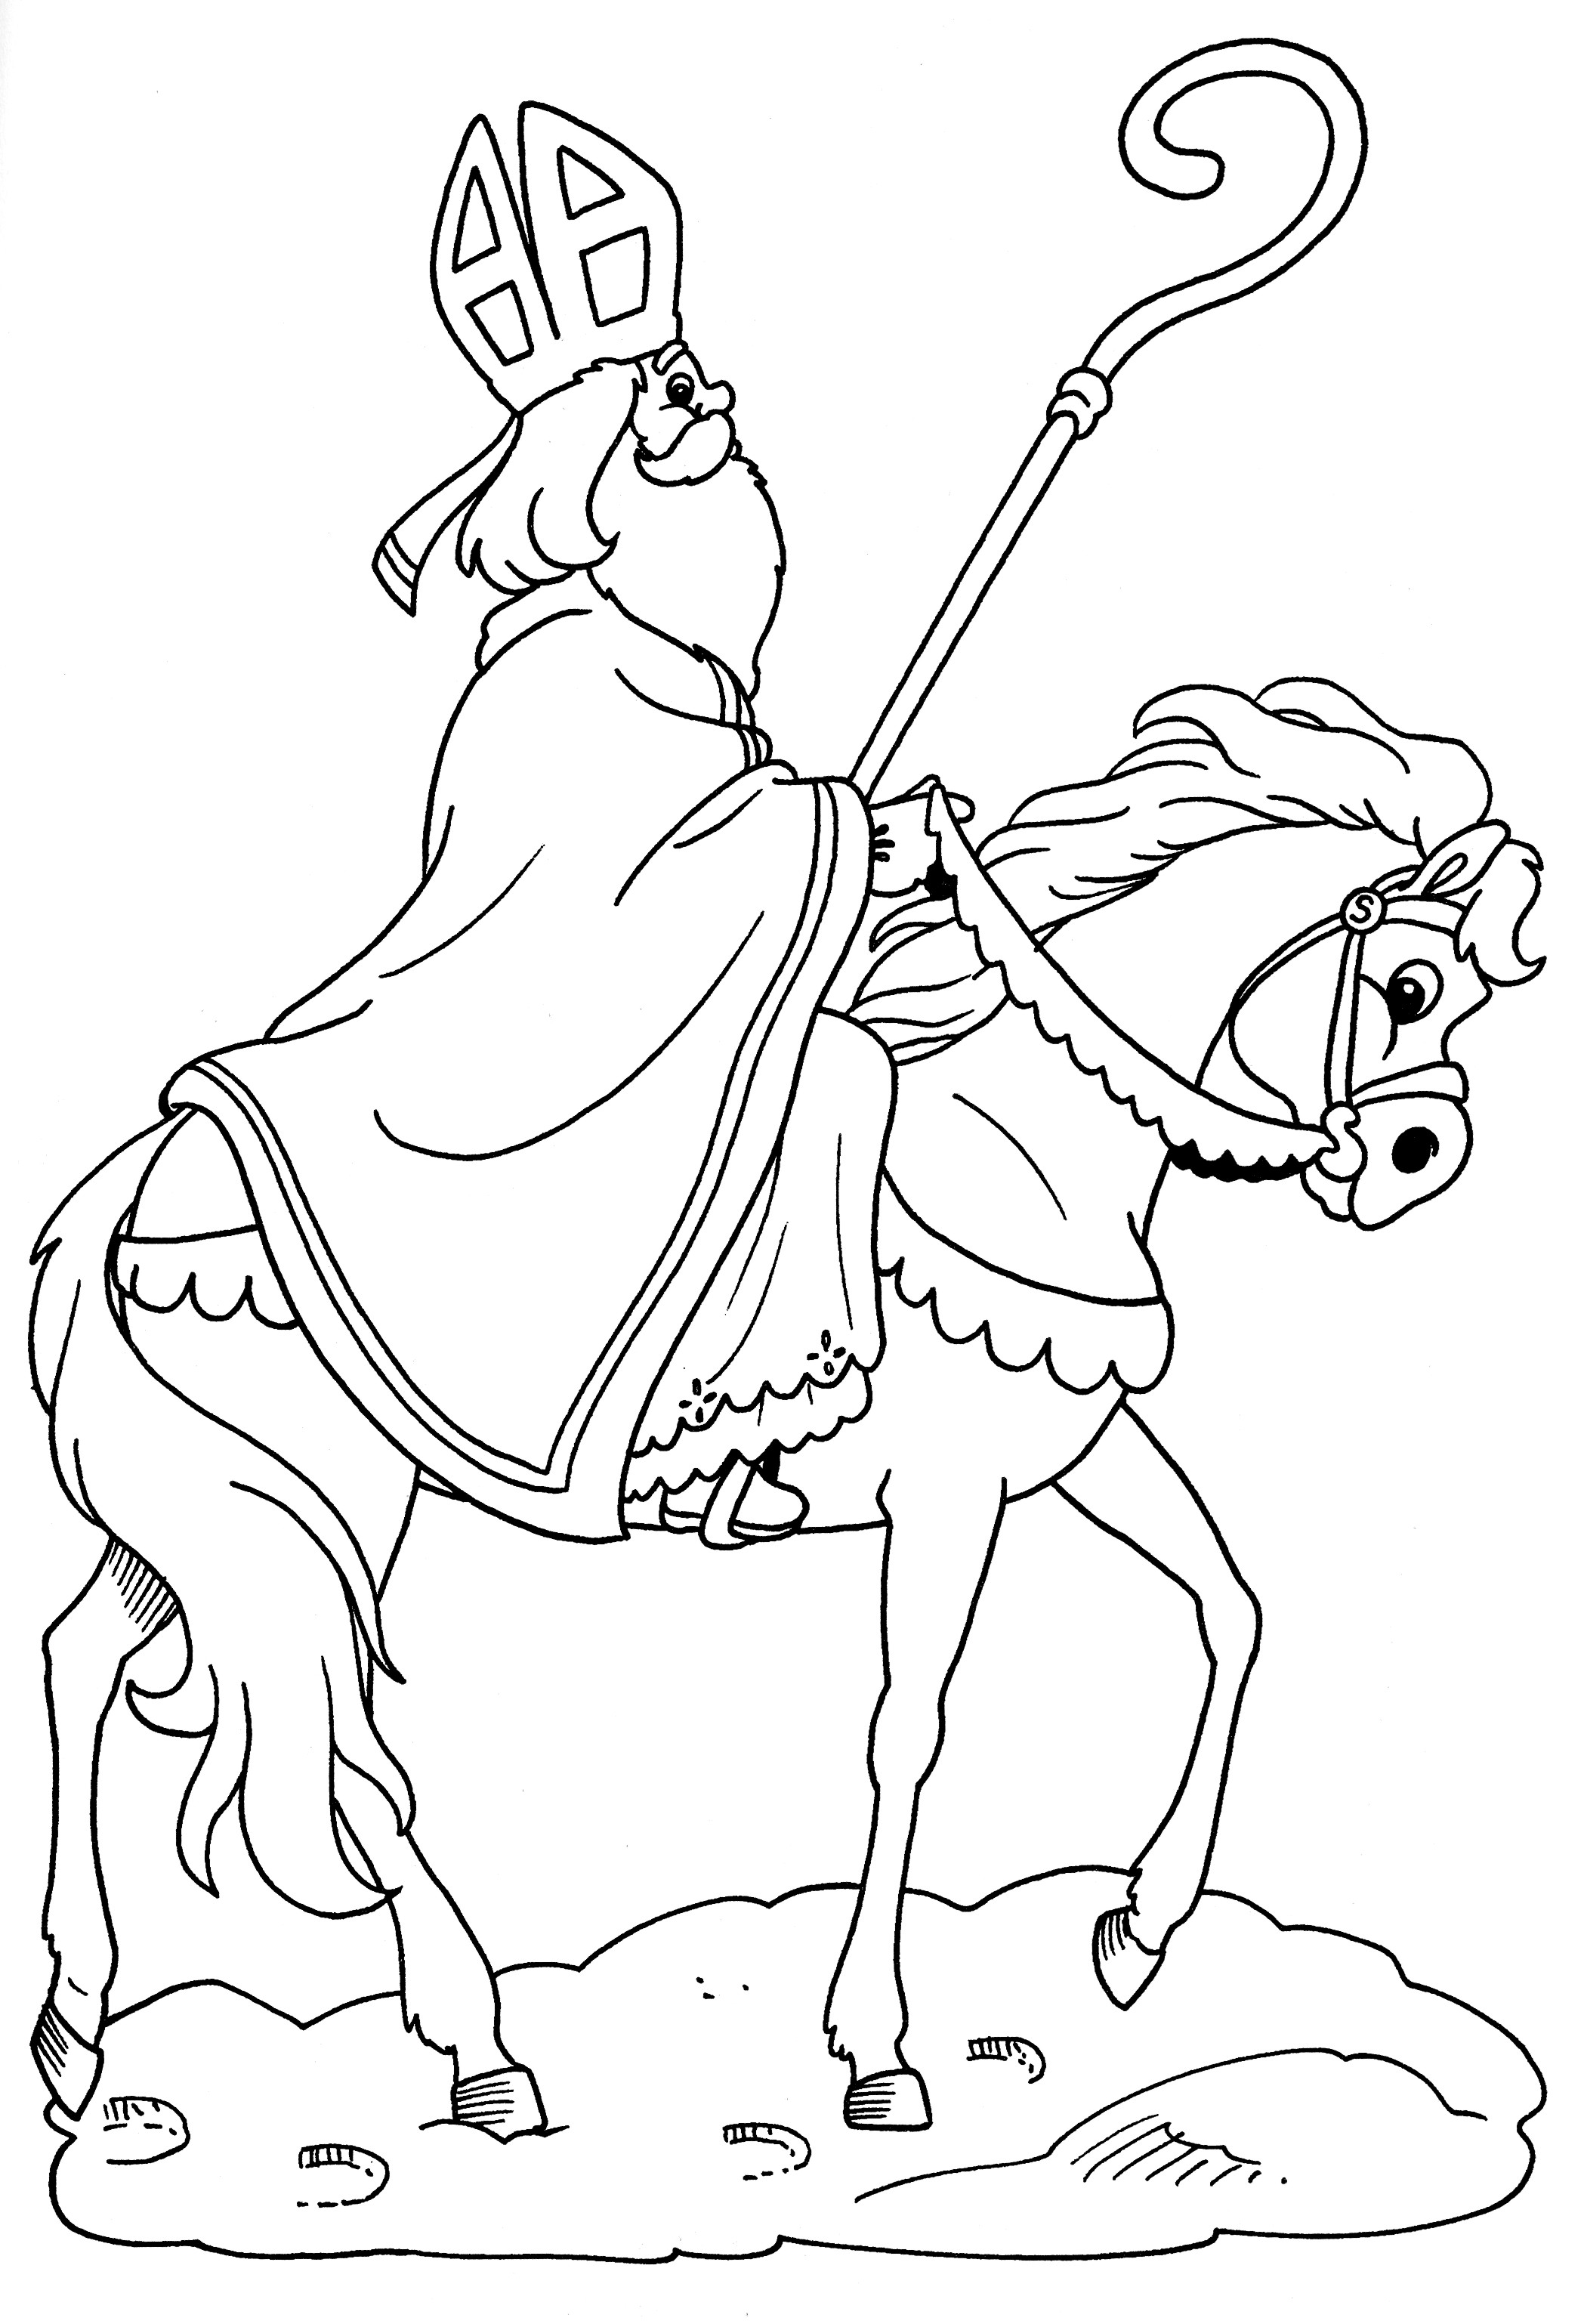 Saint Nicolas à cheval avec son bâton de pelerin